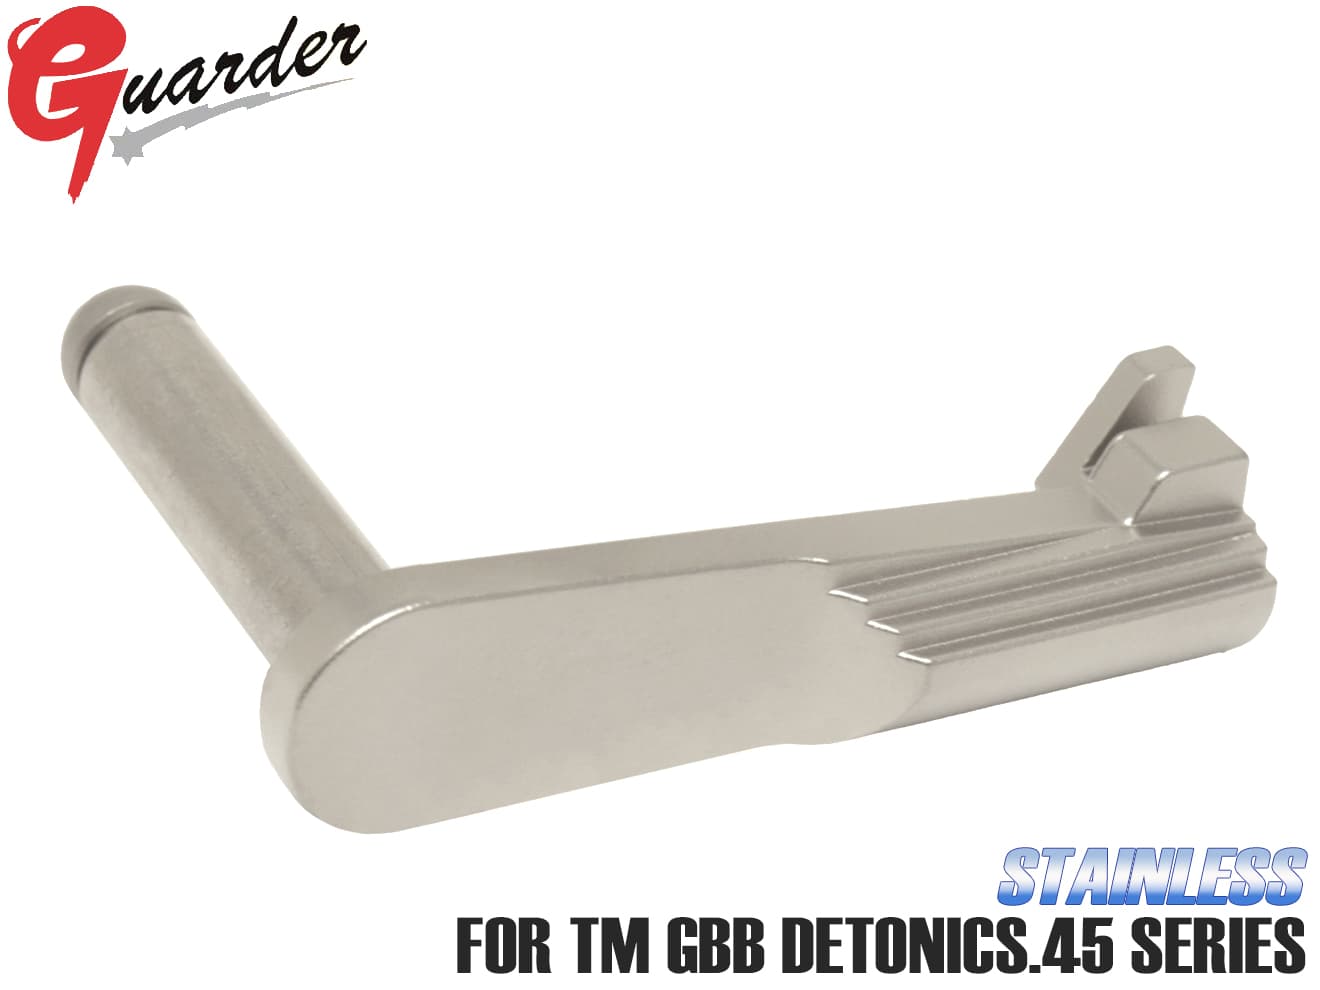 DETONICS-22 SV GUARDER ステンレス スライドストップ for マルイ DETONICS .45 強度 質感 ガーダー リアル 実現 カスタム ステン レバー 丈夫 パーツ 部品